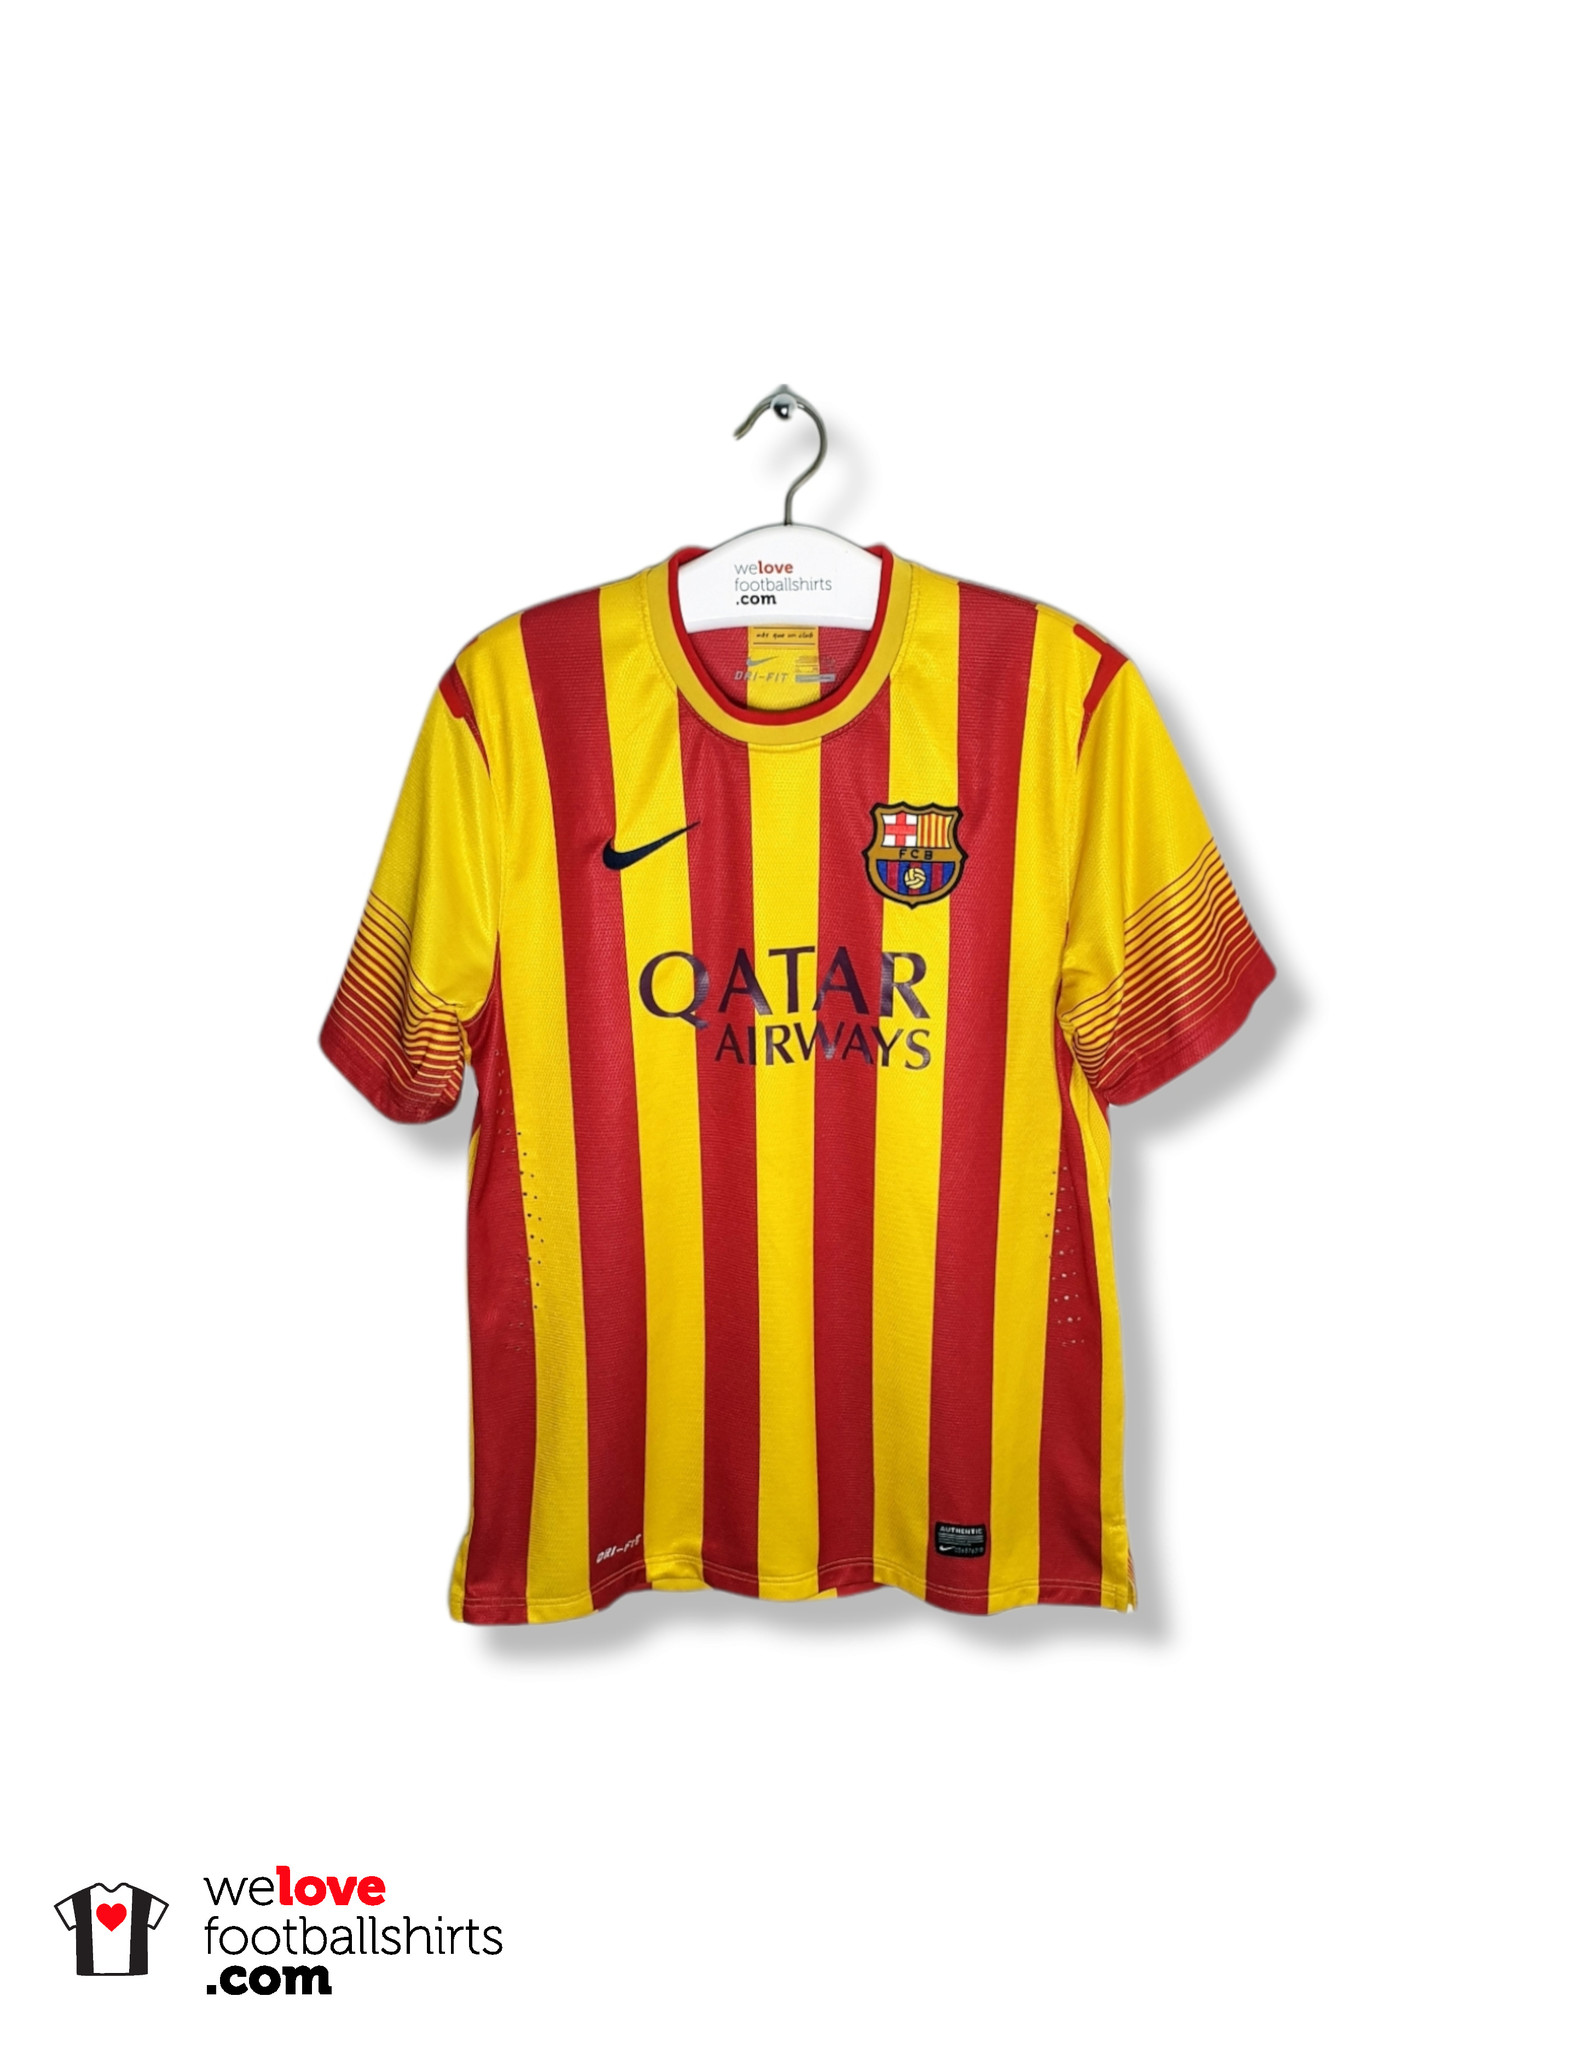 Nike "Player Edition" FC Barcelona 2013/14 Football Shirt -  Welovefootballshirts.com